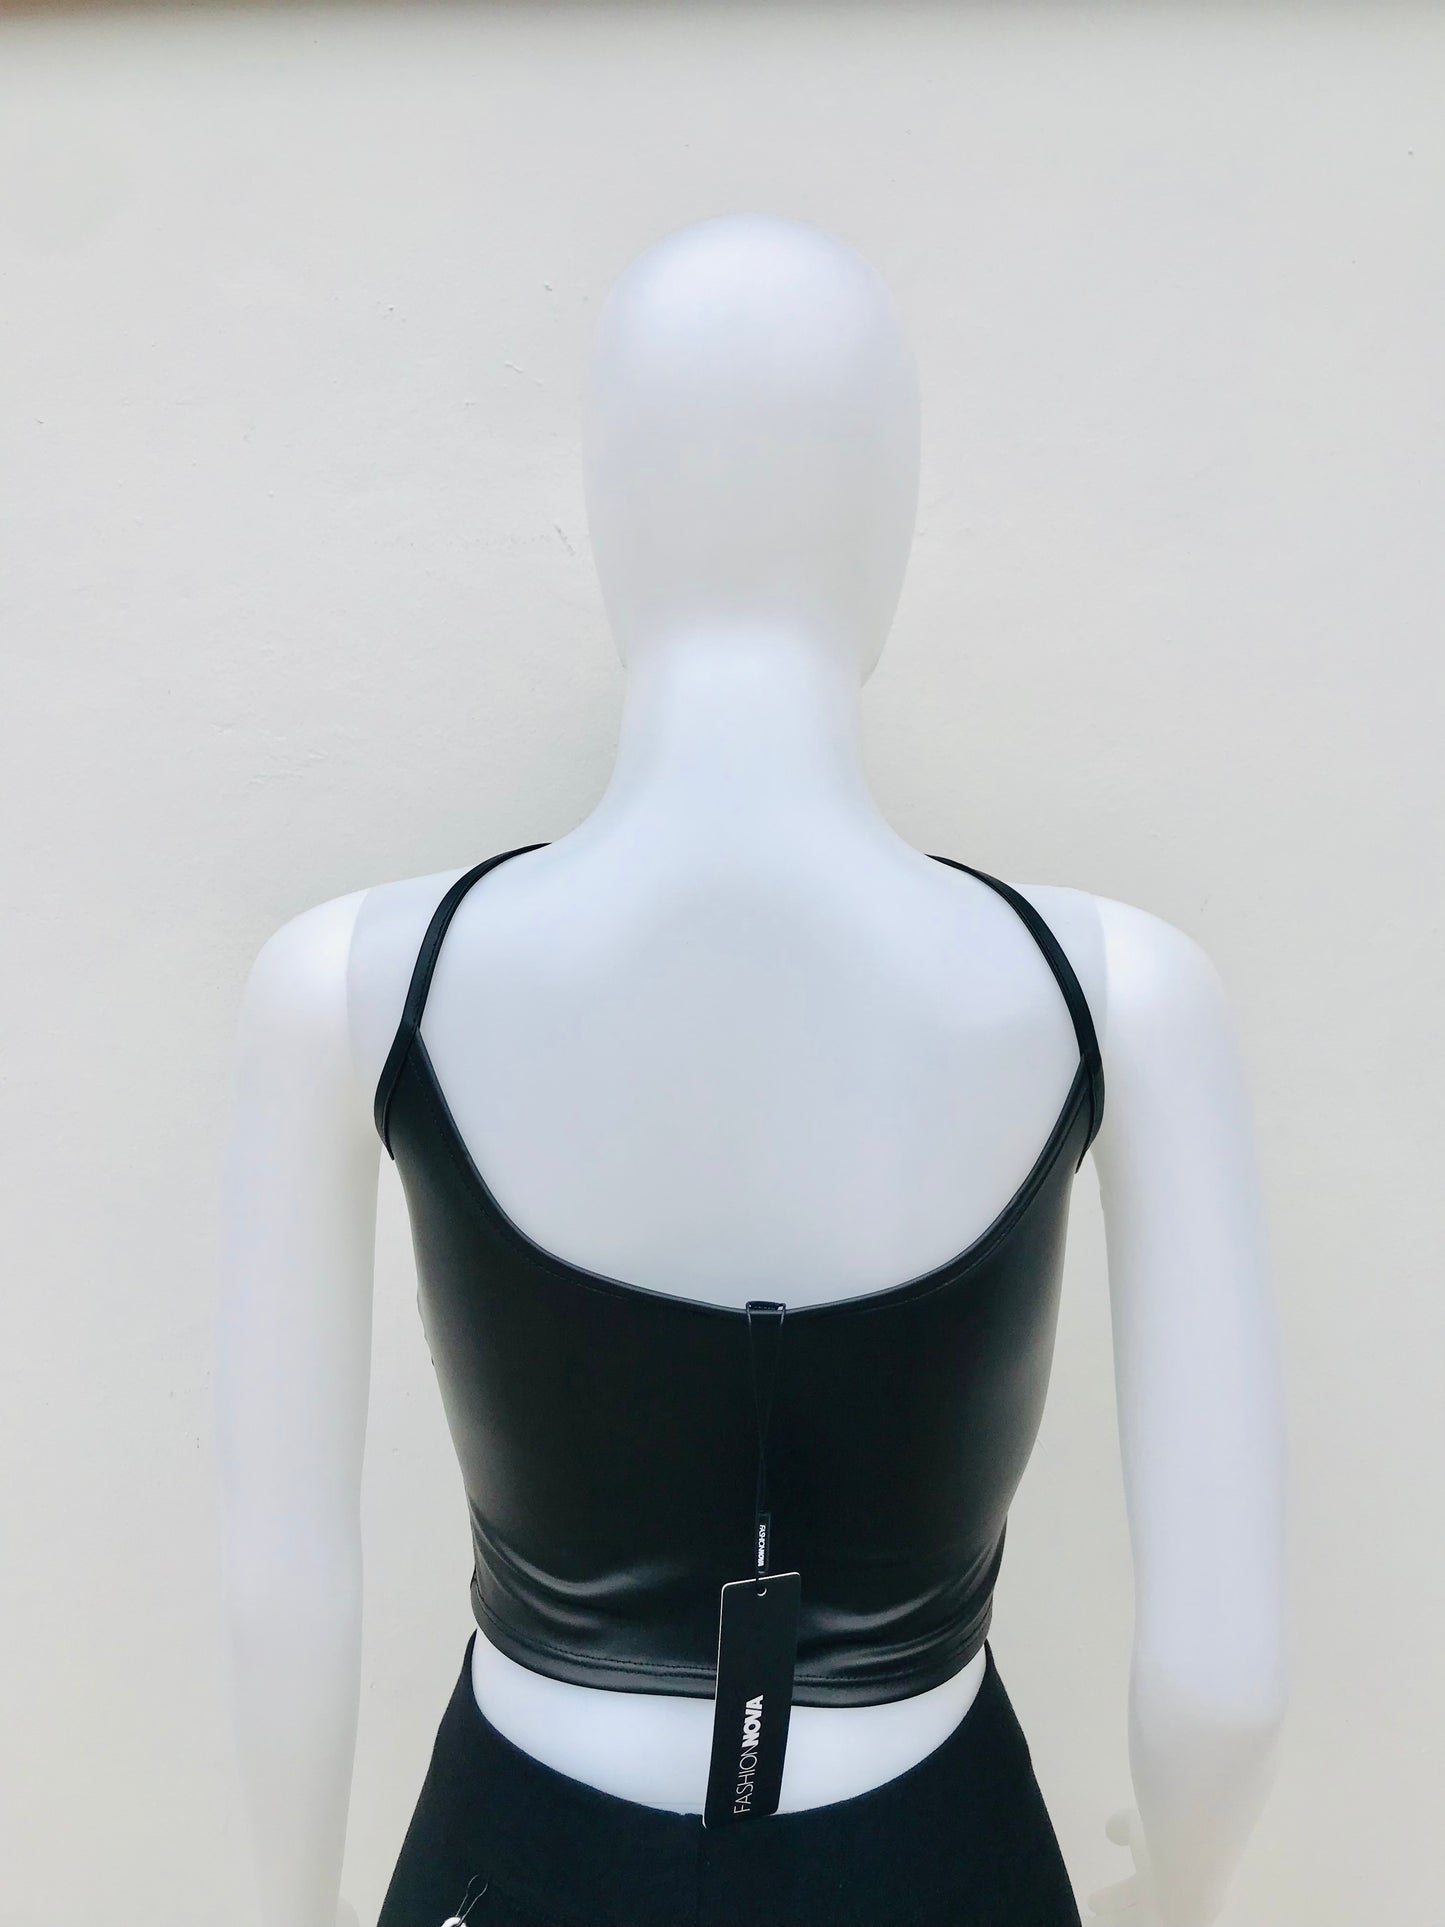 Top FASHION NOVA Original, negro en leather estilo corset de tirantes.